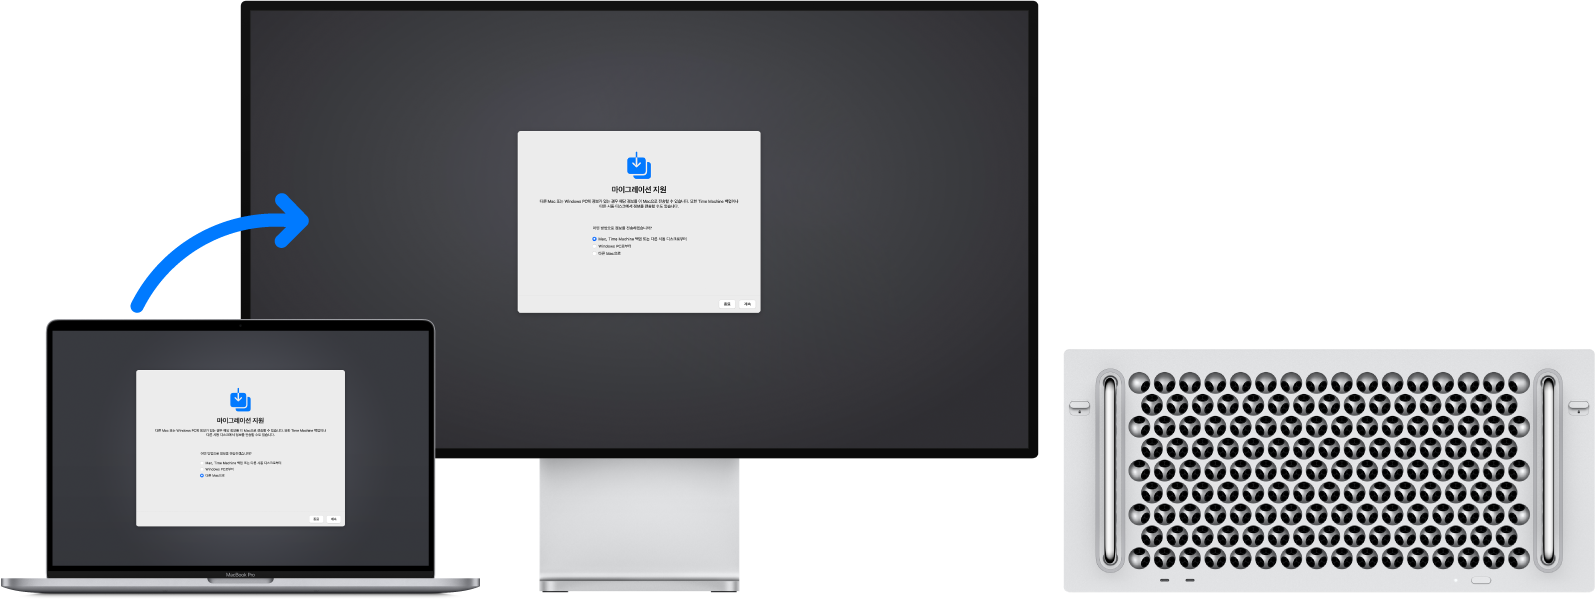 MacBook Pro와 Mac Pro에 모두 마이그레이션 지원 화면이 표시됨. MacBook Pro에서 Mac Pro로 향하는 화살표는 한 기기에서 다른 기기로 데이터가 전송됨을 의미함.